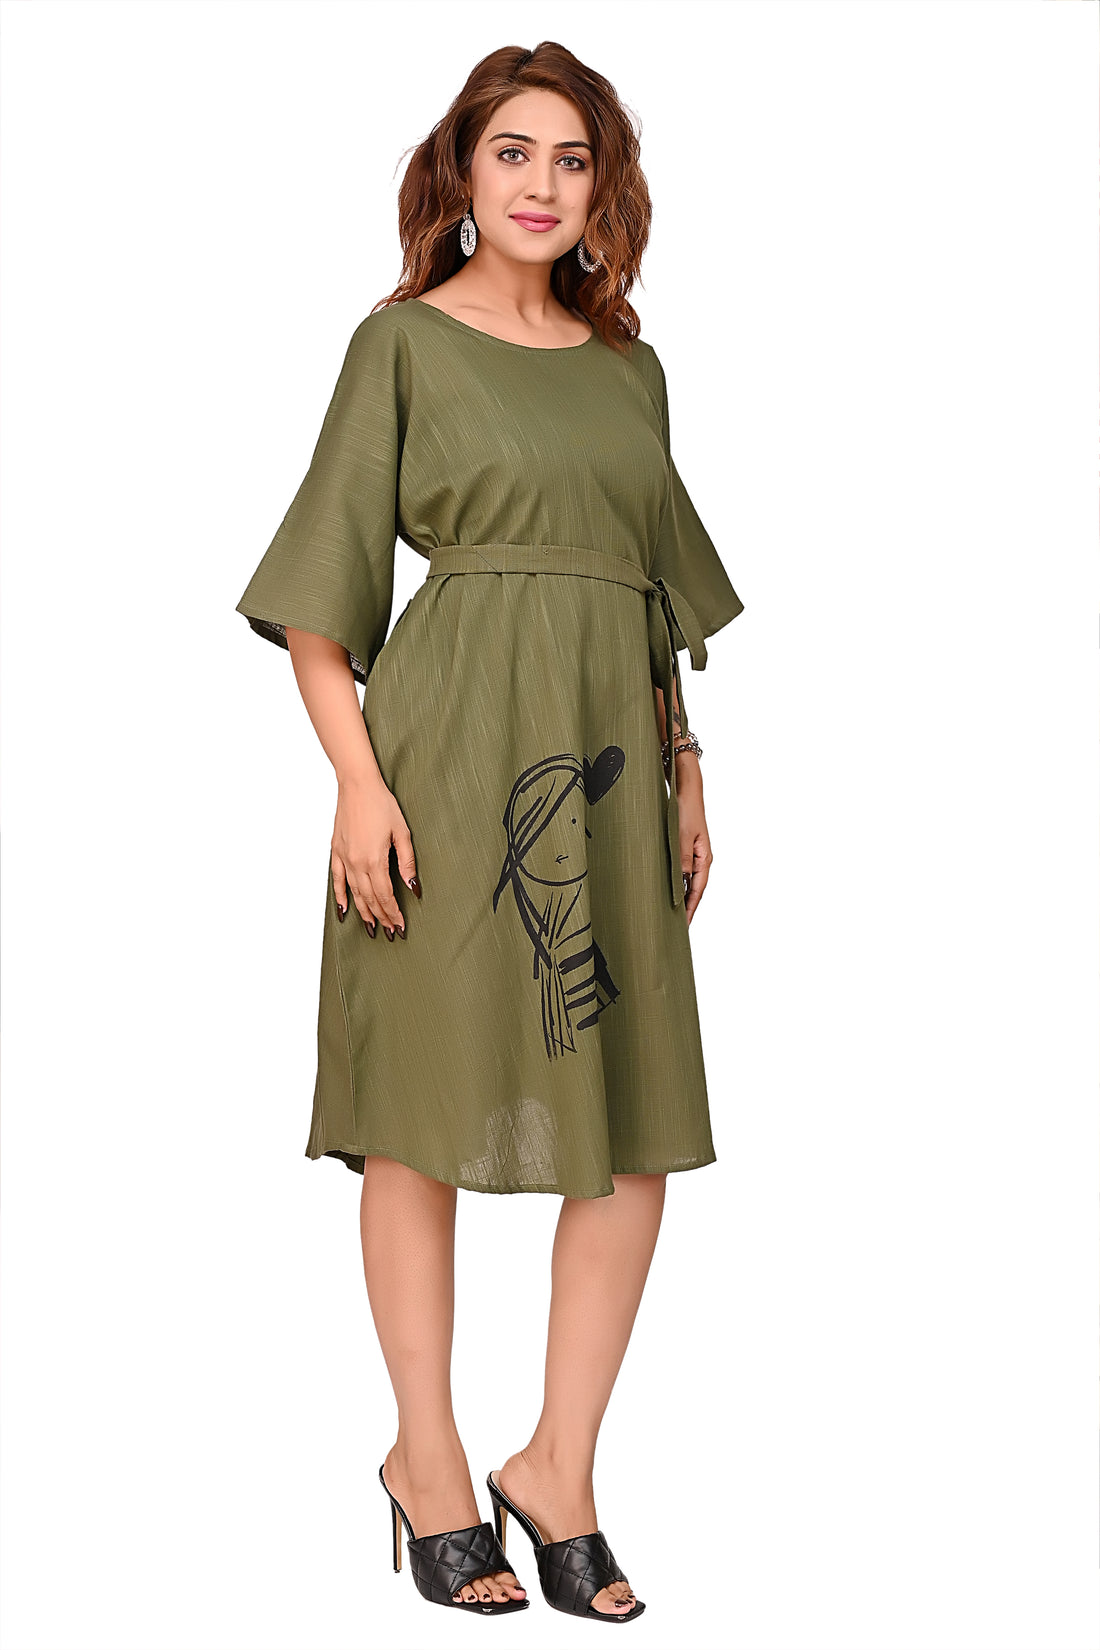 Nirmal online Premium Quality Cotton Slub Tunic Dress for Women in Olive Green Colour